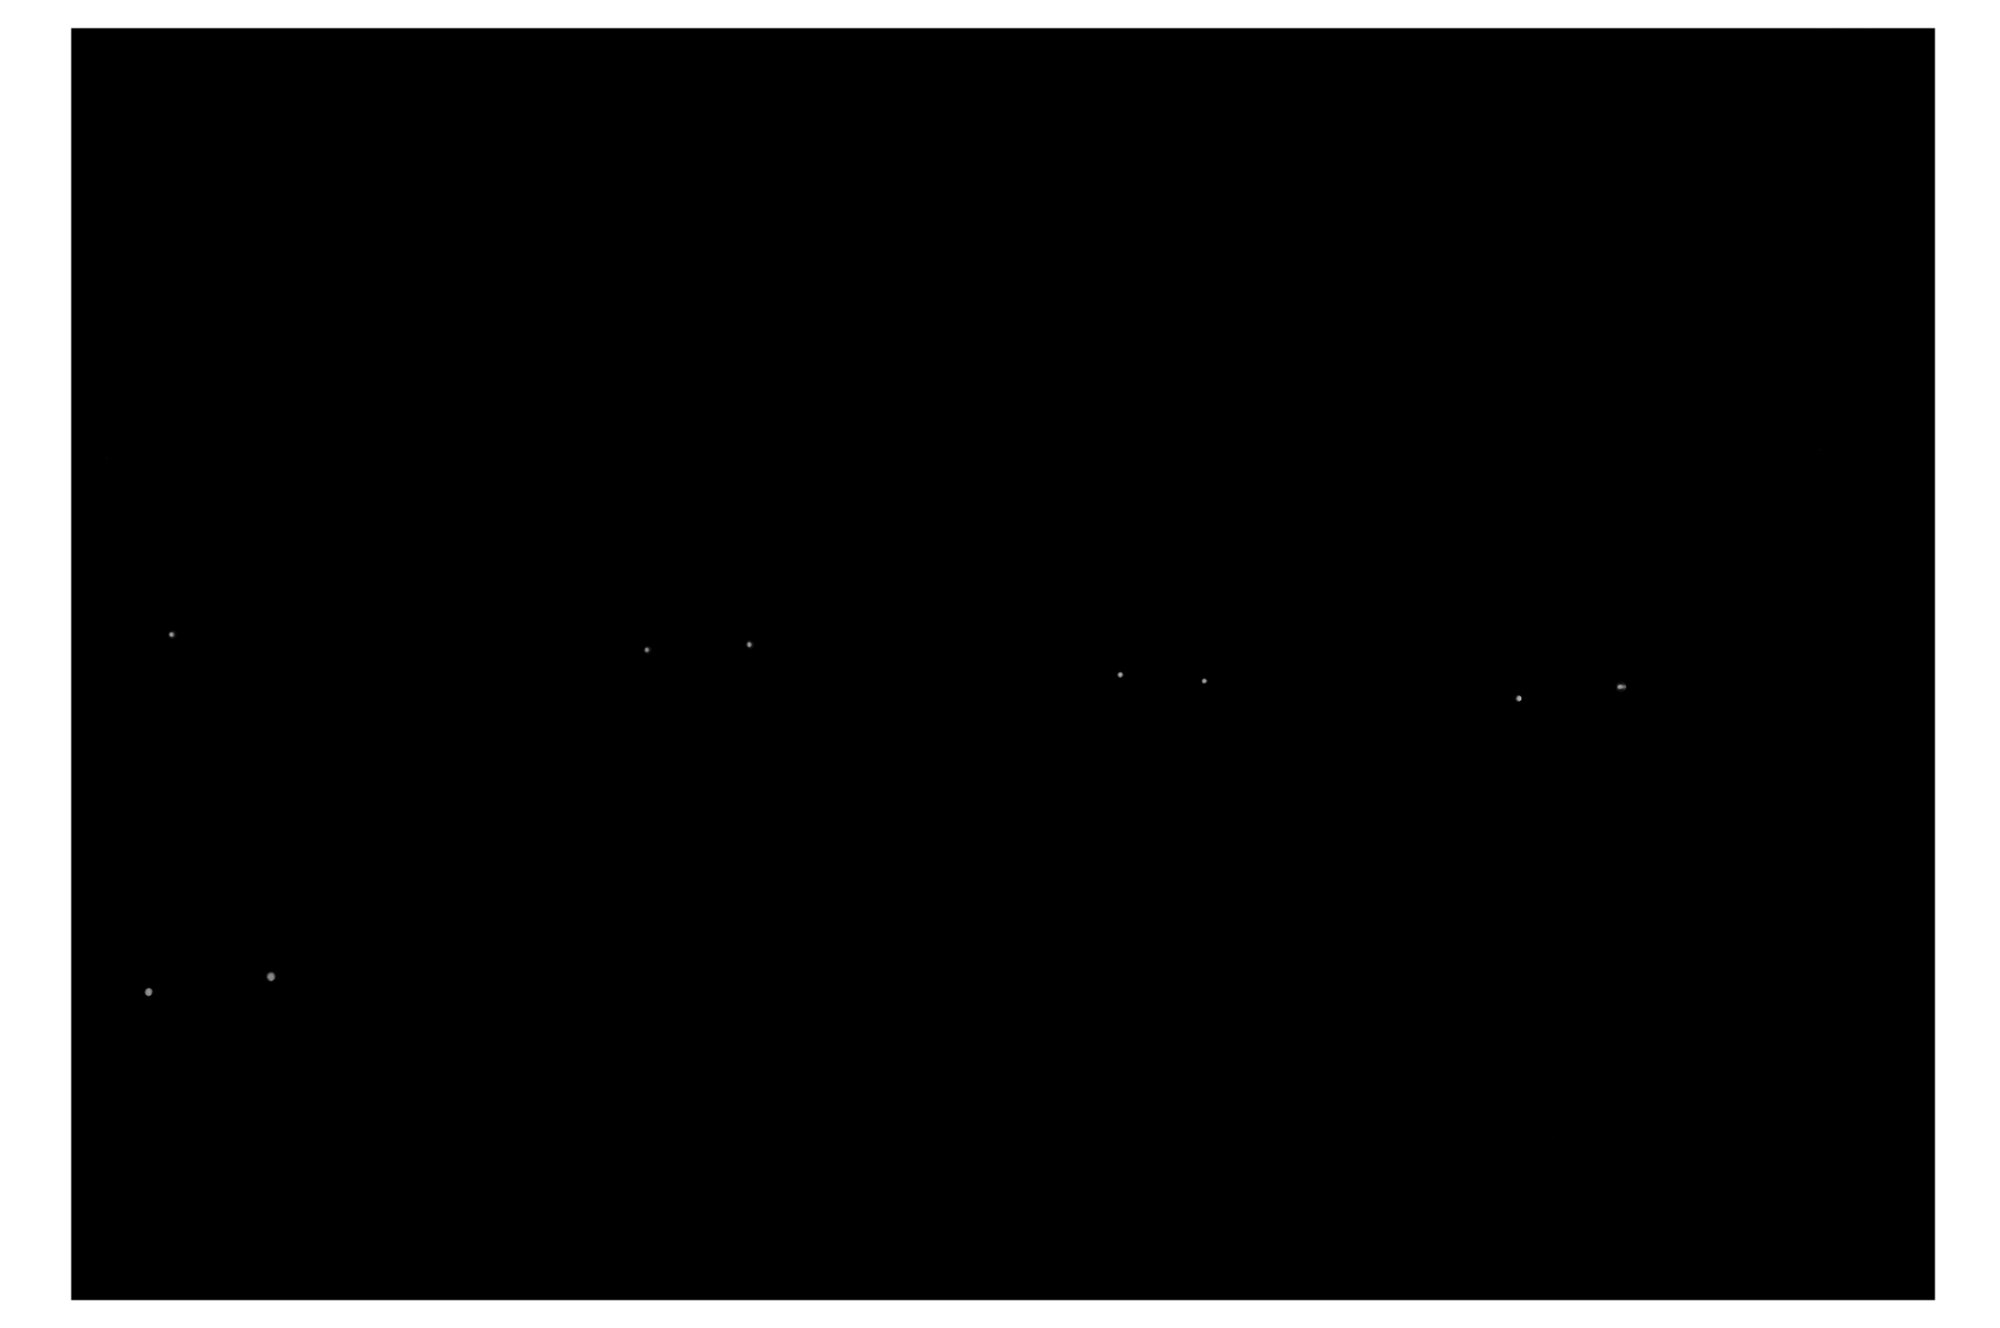 Eftihis Patsourakis, Stars #3, spray on photograph, 30.5 x 34.5 cm (12 x 13 2/3 in), 2010